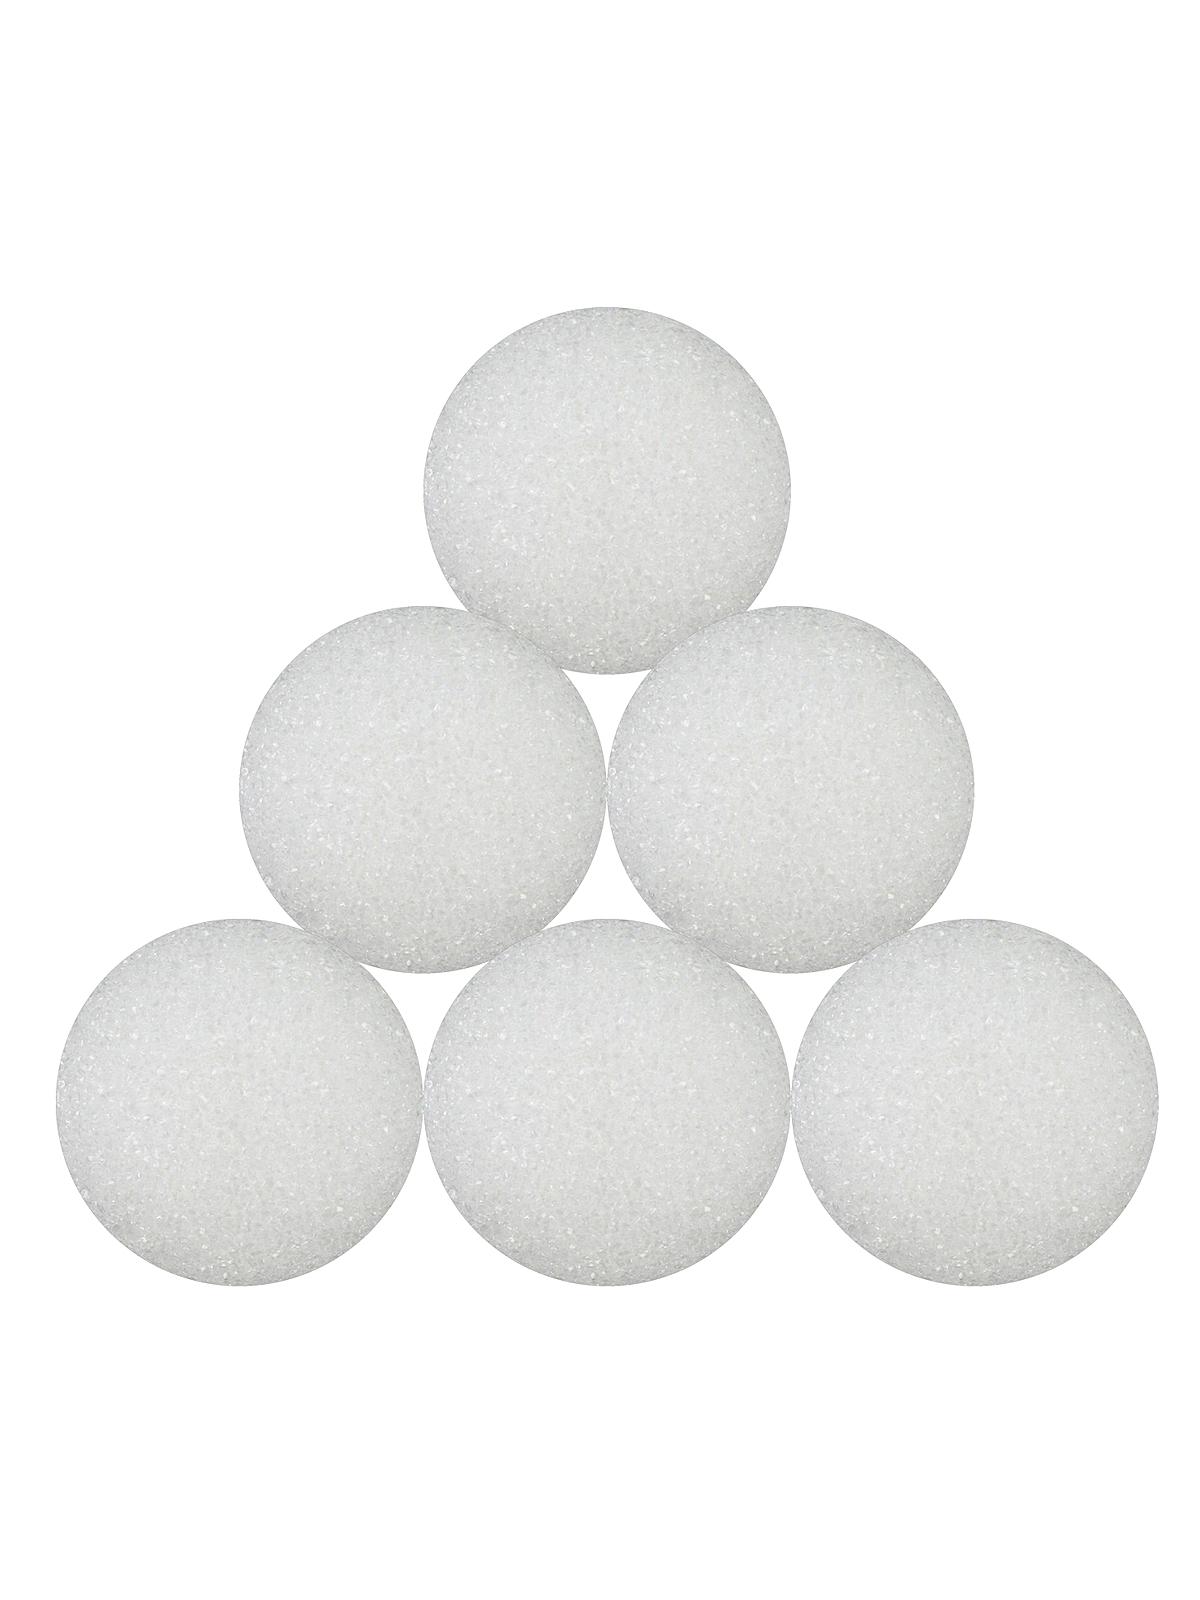 Styrofoam Snowballs 3 In. Pack Of 6